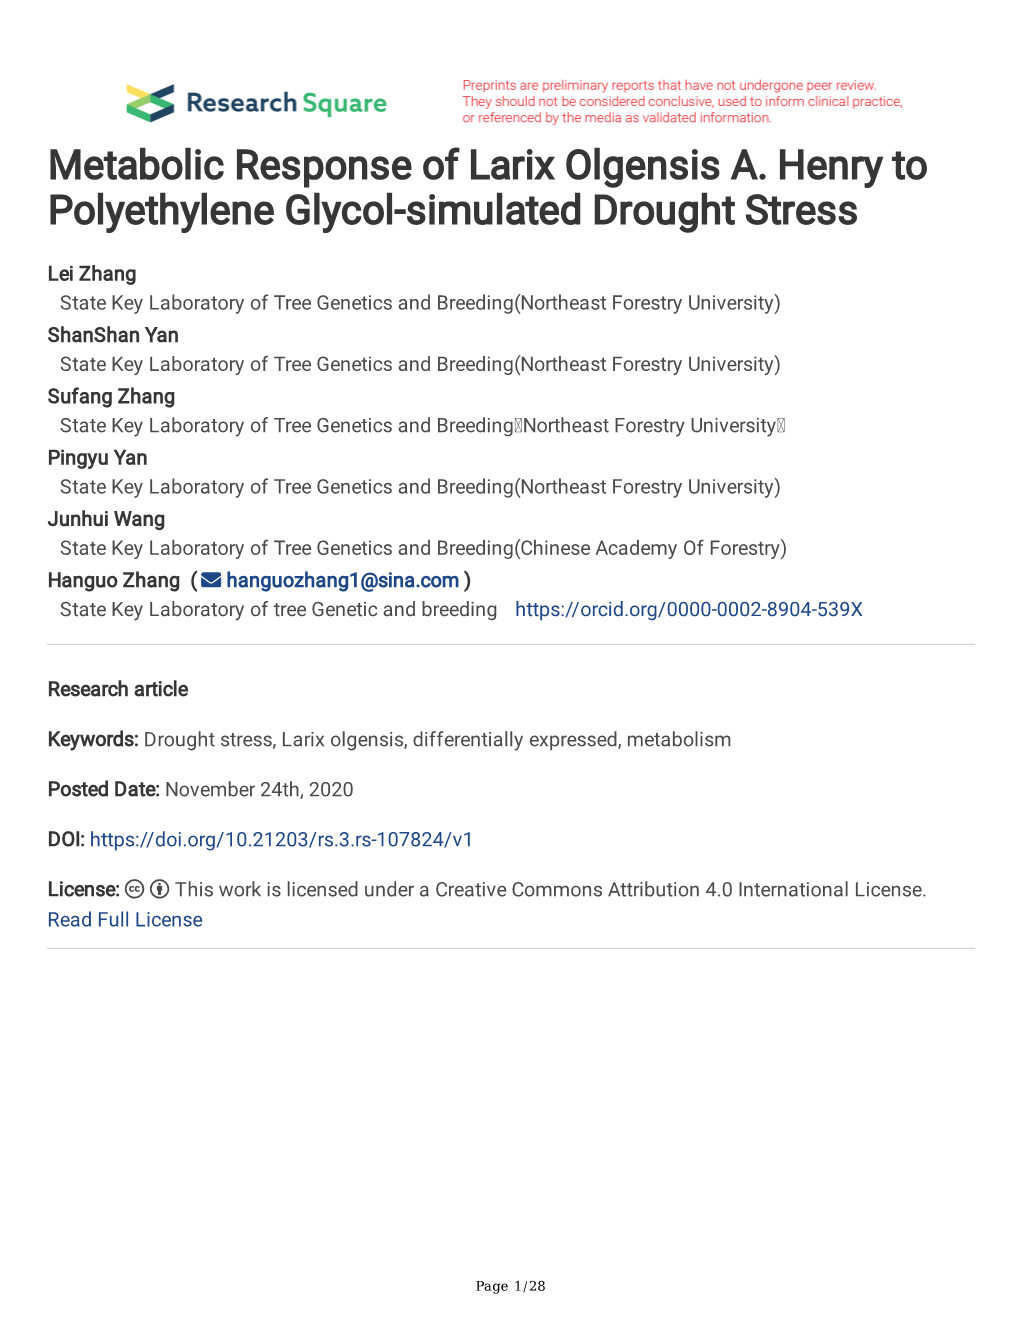 Metabolic Response of Larix Olgensis A. Henry to Polyethylene Glycol-Simulated Drought Stress